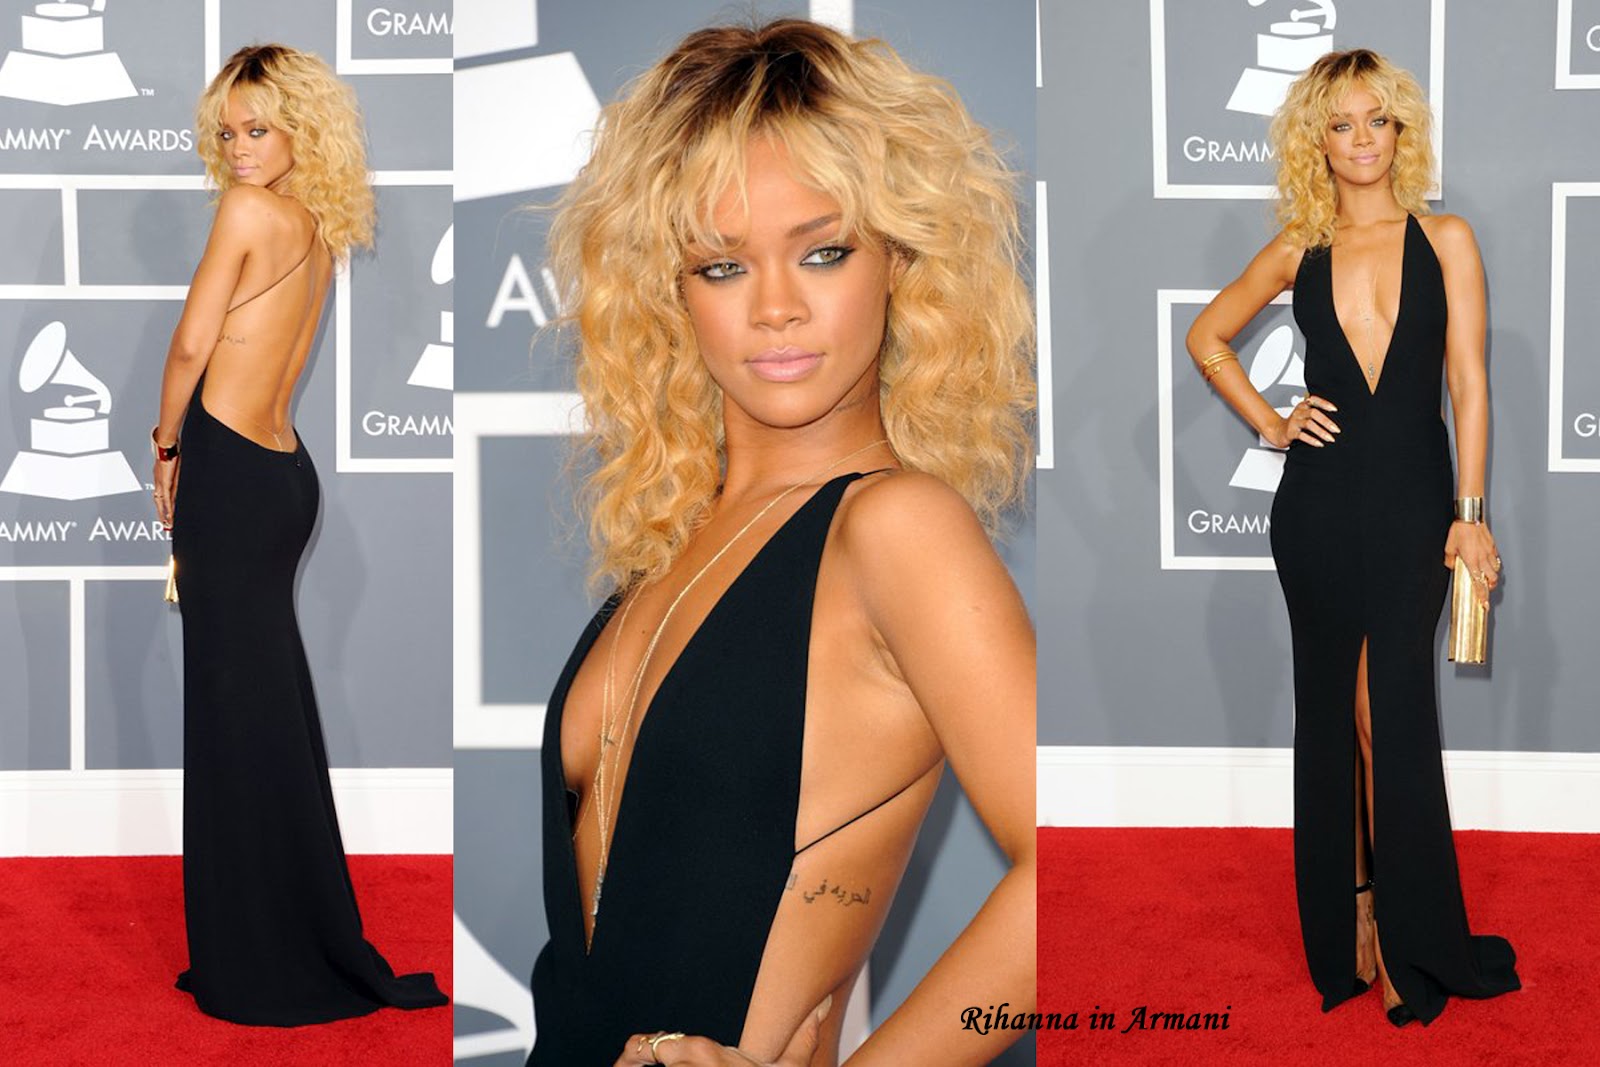 http://1.bp.blogspot.com/-uGwz9_W6oQ0/Tzh14_hcxII/AAAAAAAAEfs/AUT4i4TphRo/s1600/Rihanna+Grammy2012.jpg